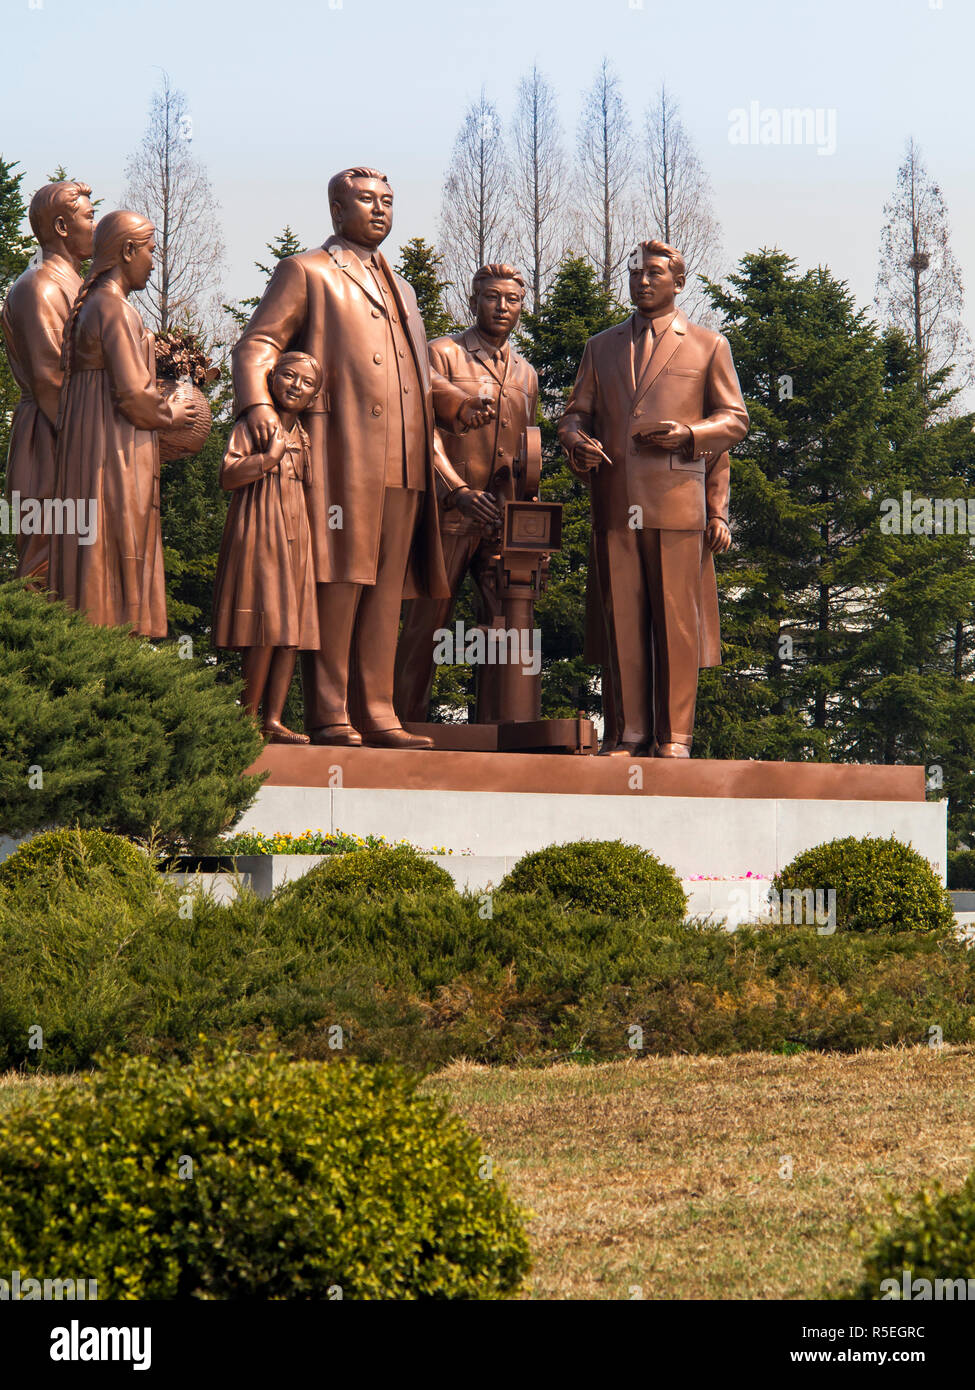 Democratic Peoples's Republic of Korea (DPRK), North Korea, Pyongyang, Pyongyang Film Studios, Statue of Kim Il Sung directing productions Stock Photo